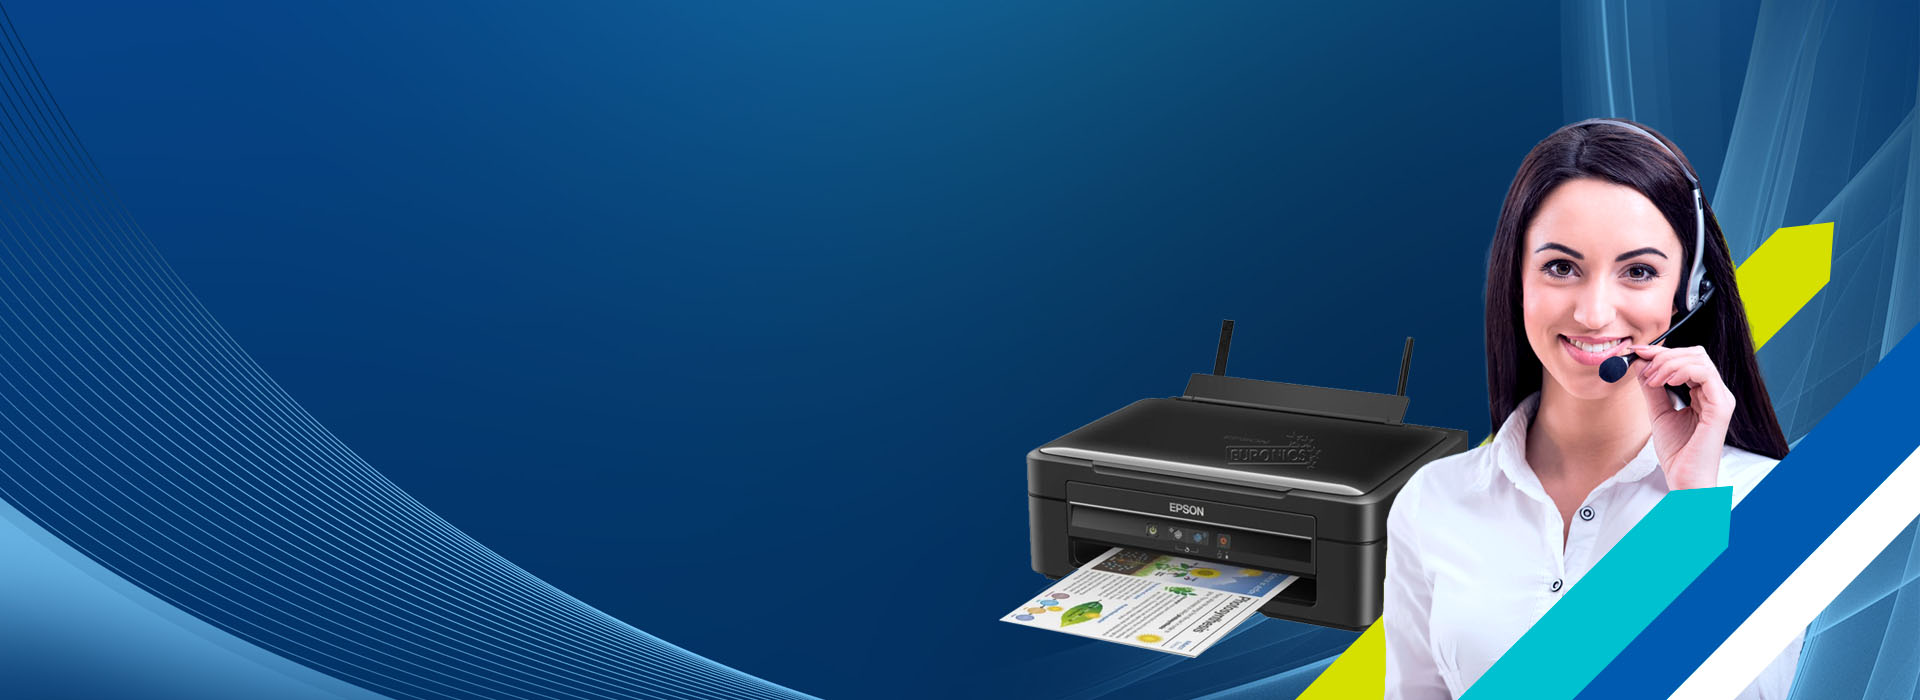 Epson-Support-Printer